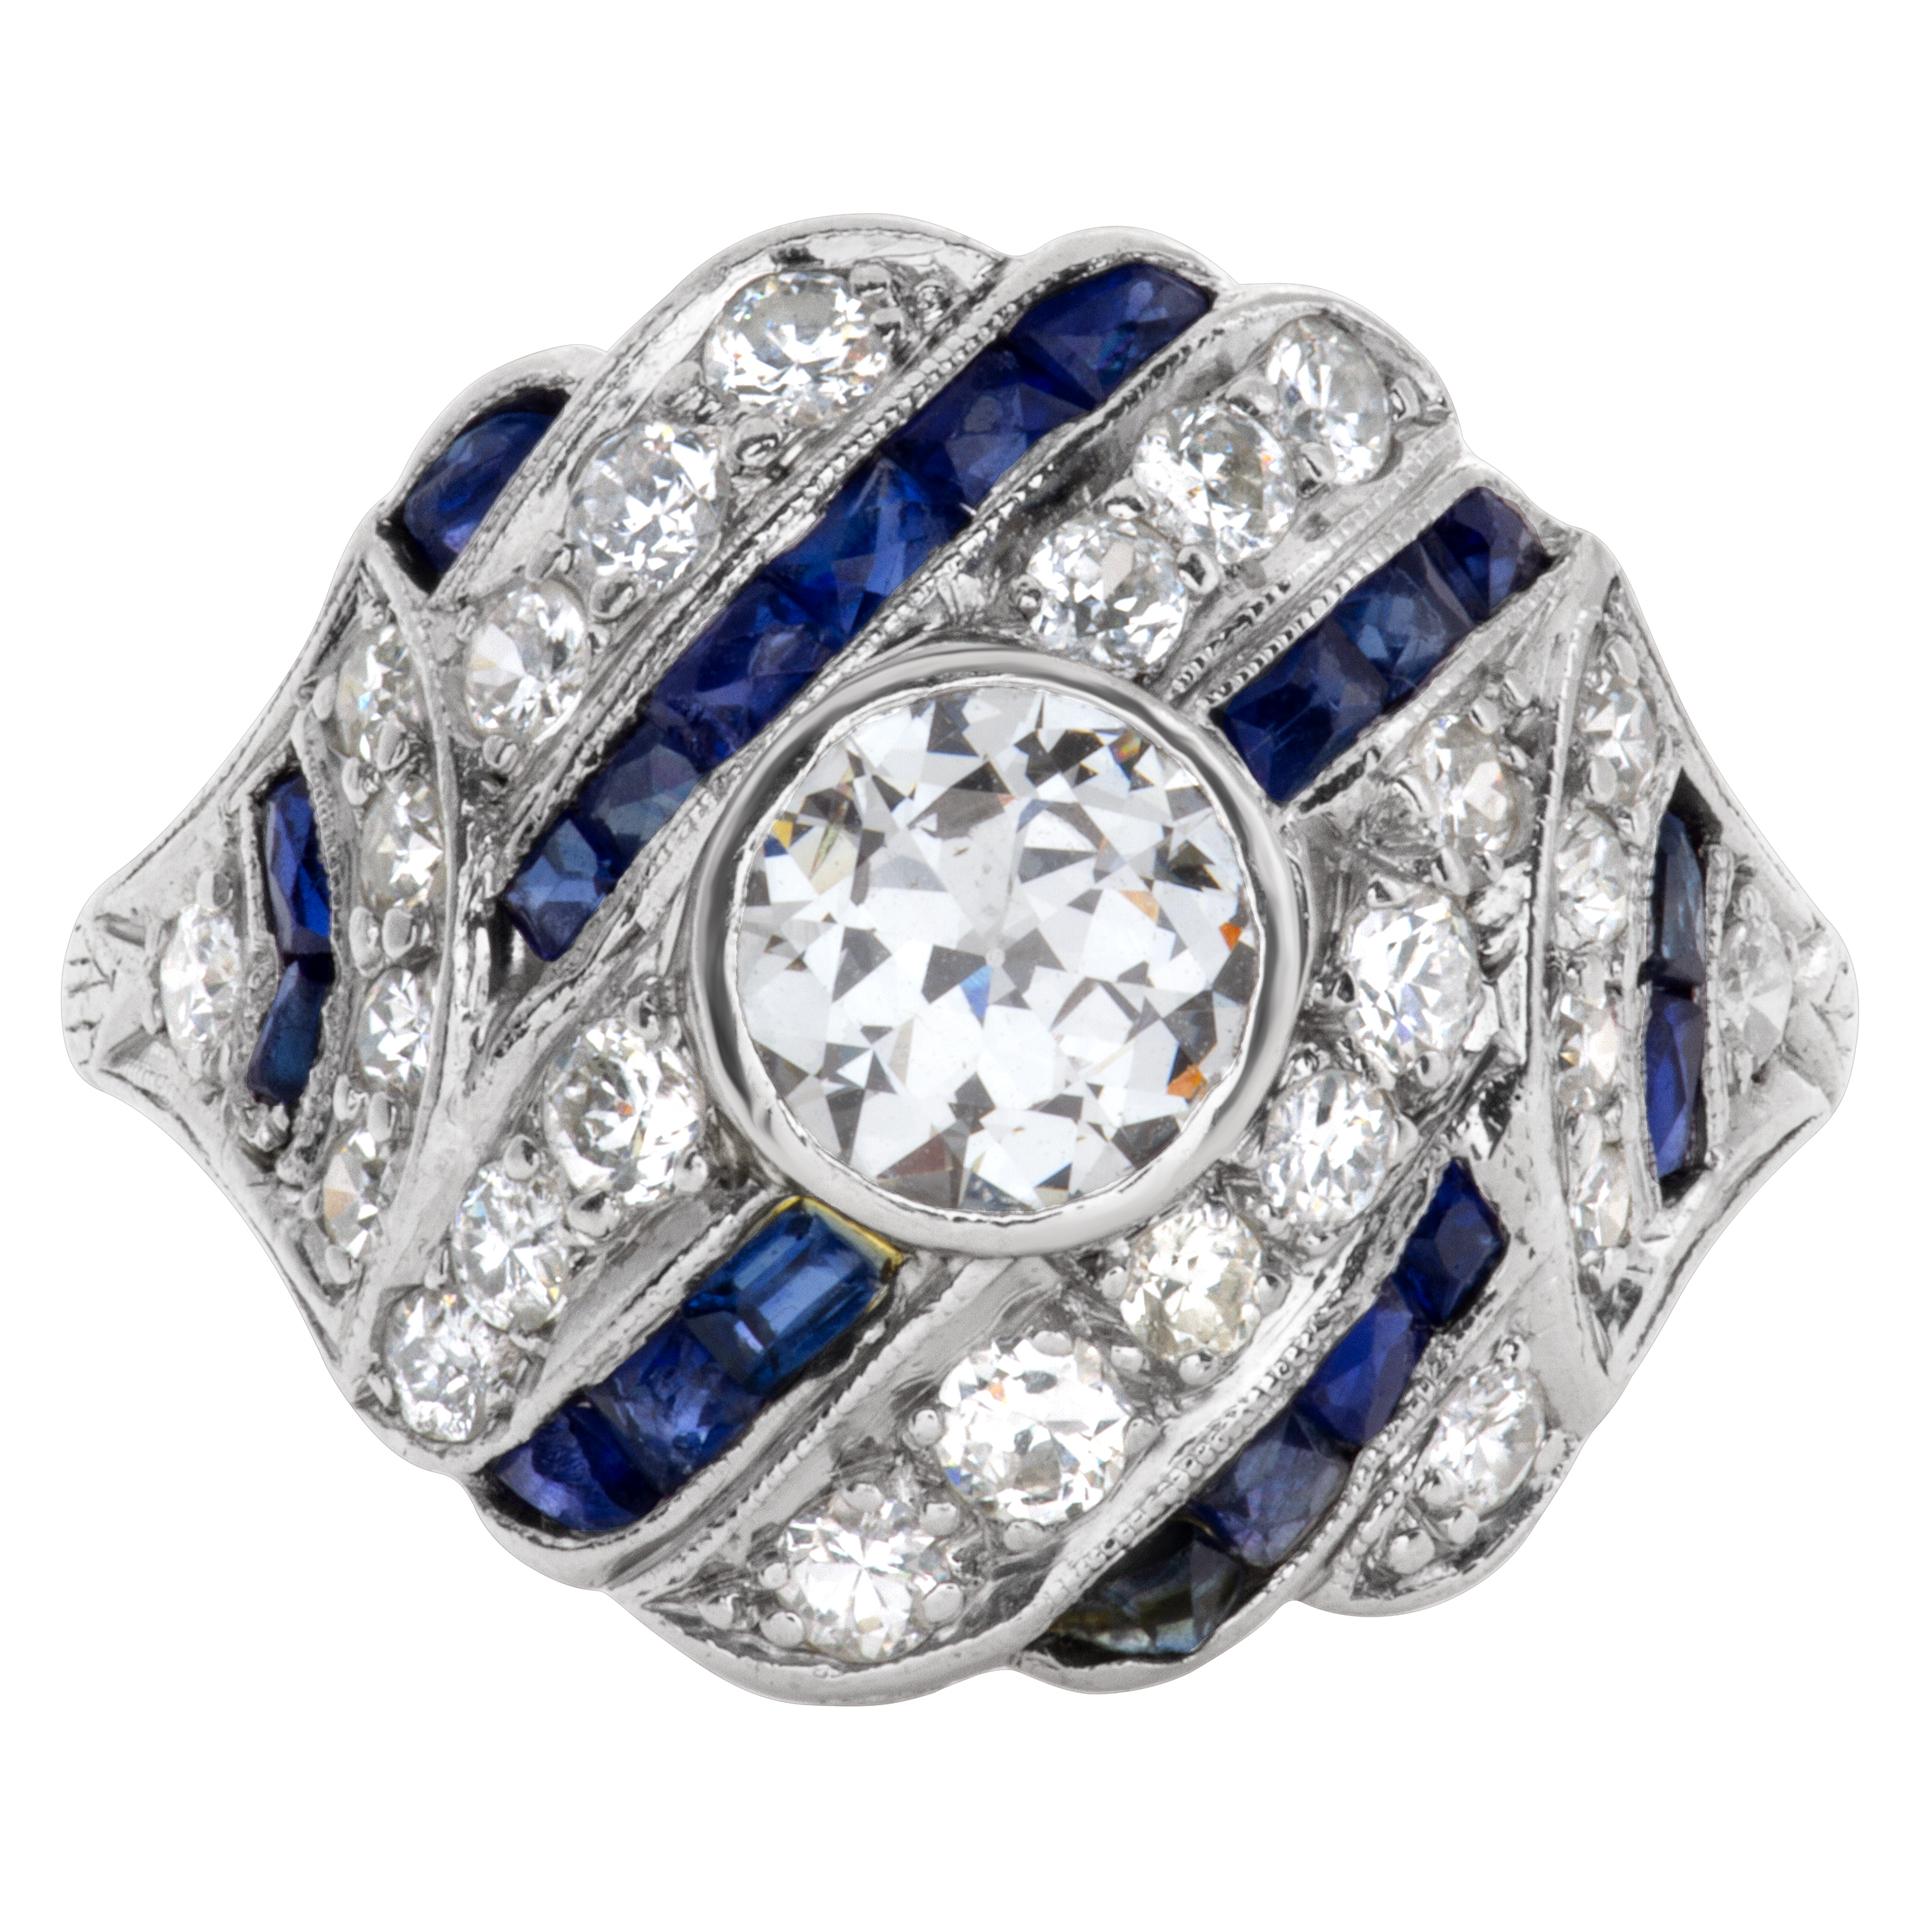 Old European Cut Diamond and Sapphire Art Deco Ring in Platinum